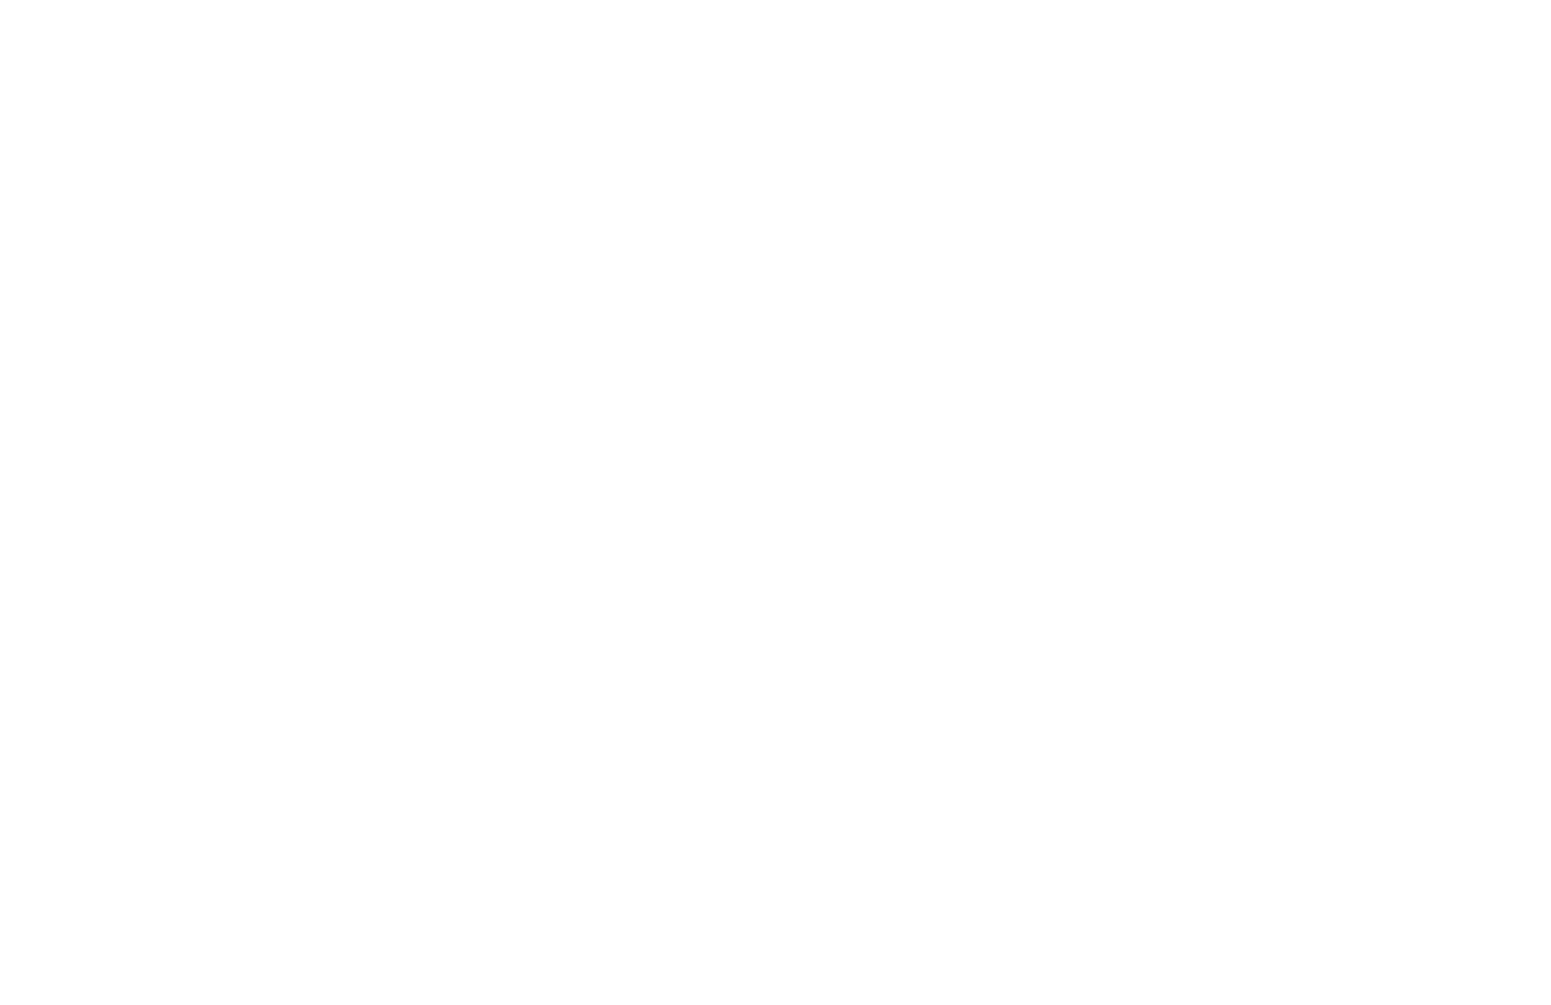 Thob Al Aseel Company logo pour fonds sombres (PNG transparent)